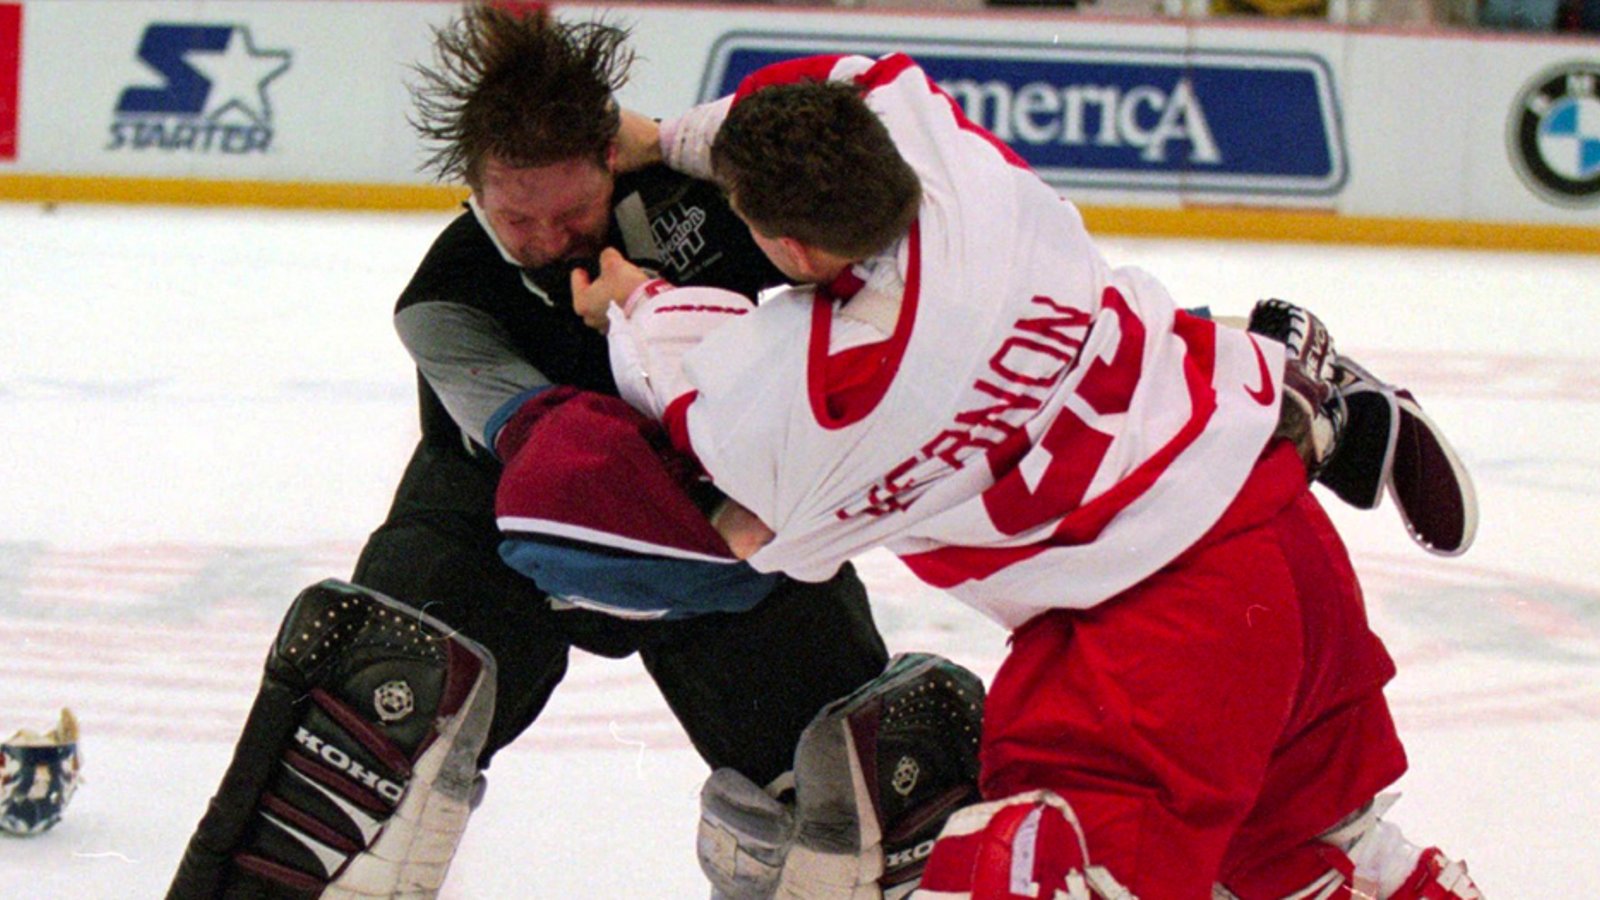 Throwback: The brawl in HockeyTown